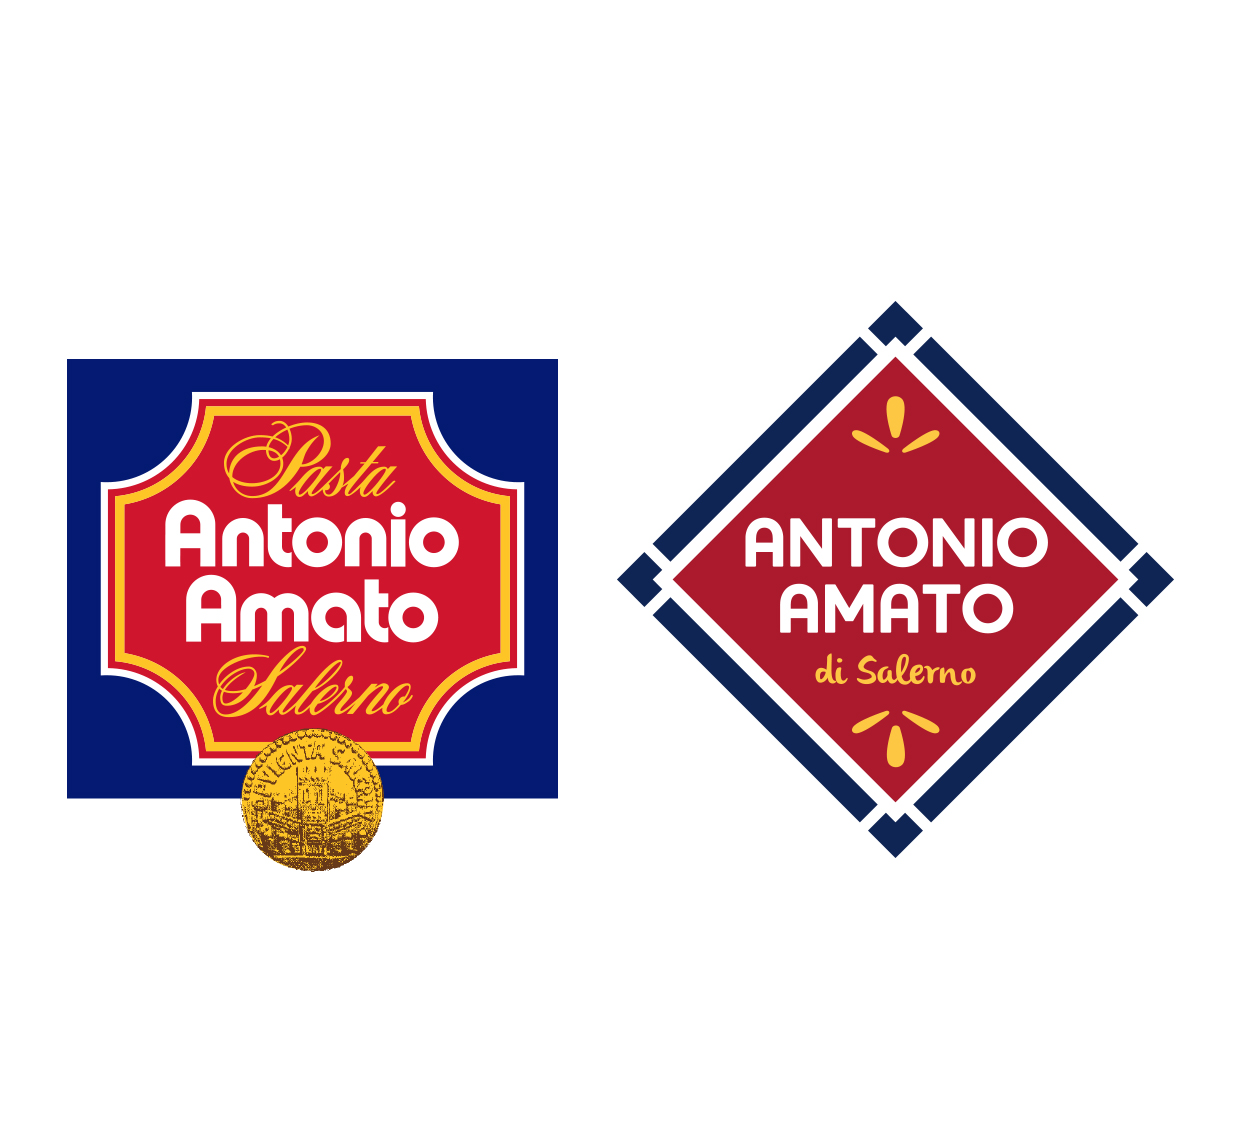 Antonio Amato logo prima e dopoTwo Images Image 1 1240x1136 2